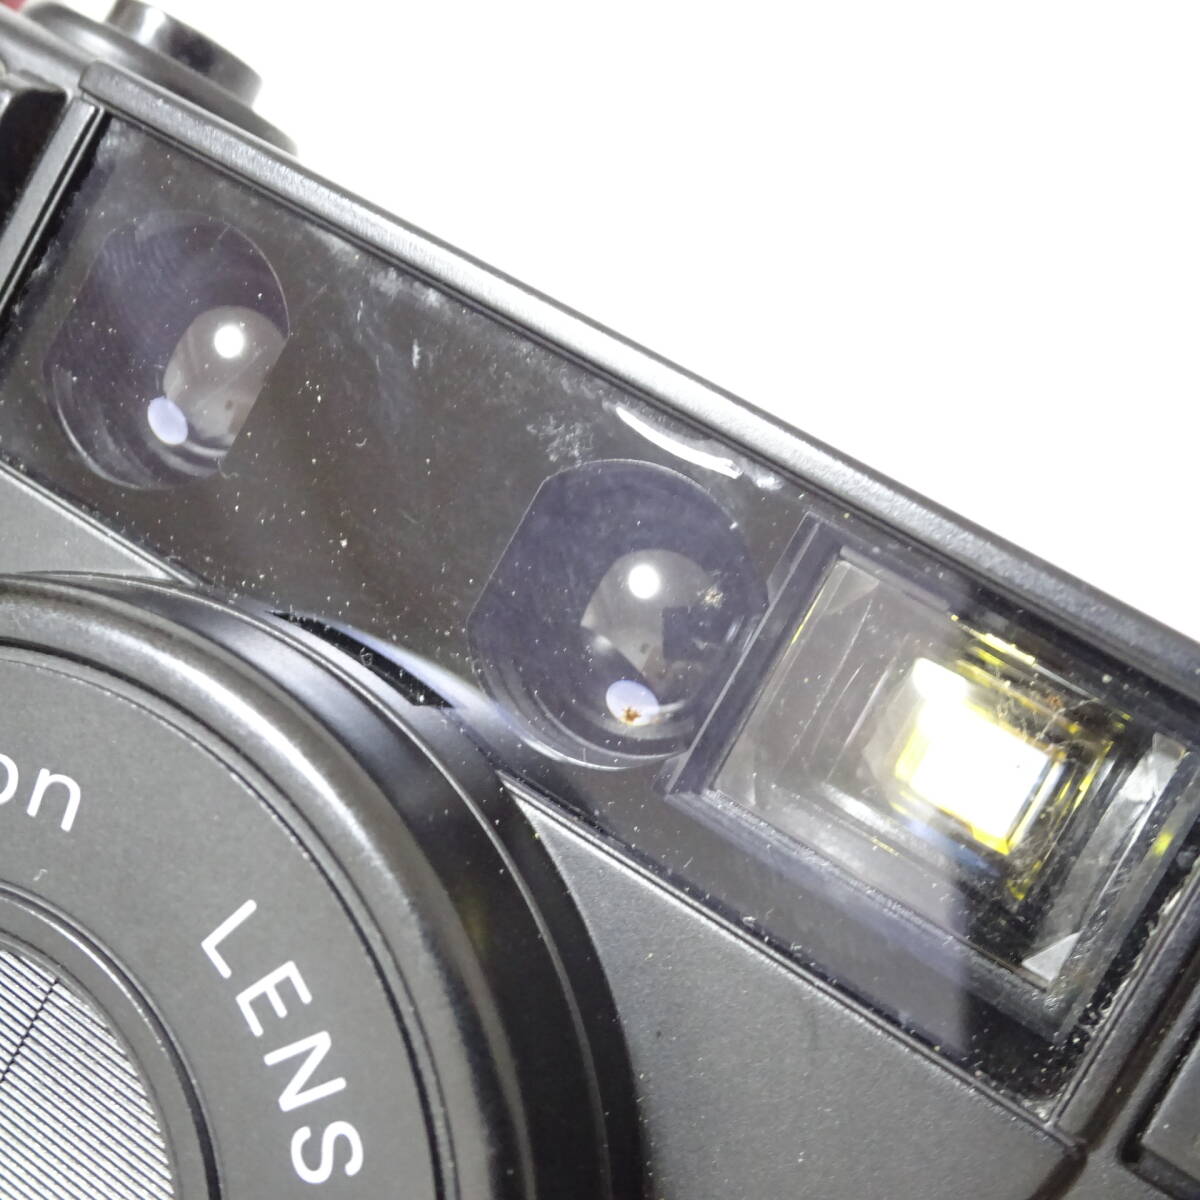 Nikon ニコン L35AD2 コンパクトフィルムカメラ 動作未確認 使用感有 60サイズ発送 K-2619739-171-mrrz_画像3